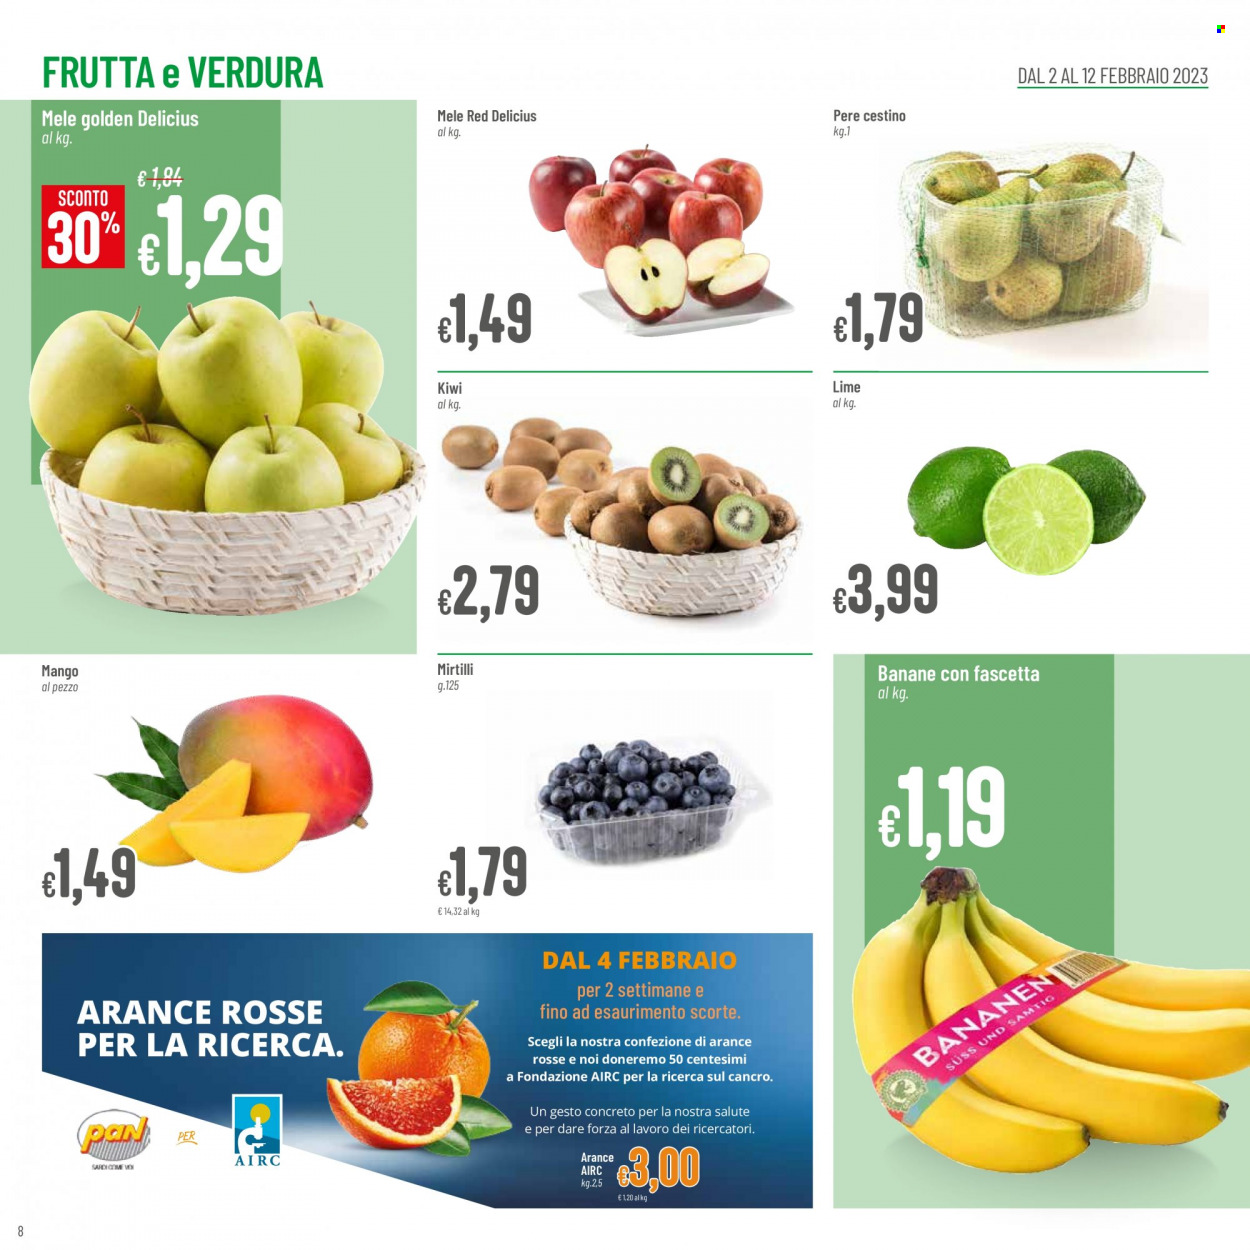 thumbnail - Volantino Pan - 2/2/2023 - 11/2/2023 - Prodotti in offerta - banane, mele, pere, mango, mirtilli, lime, kiwi, Delicius. Pagina 8.